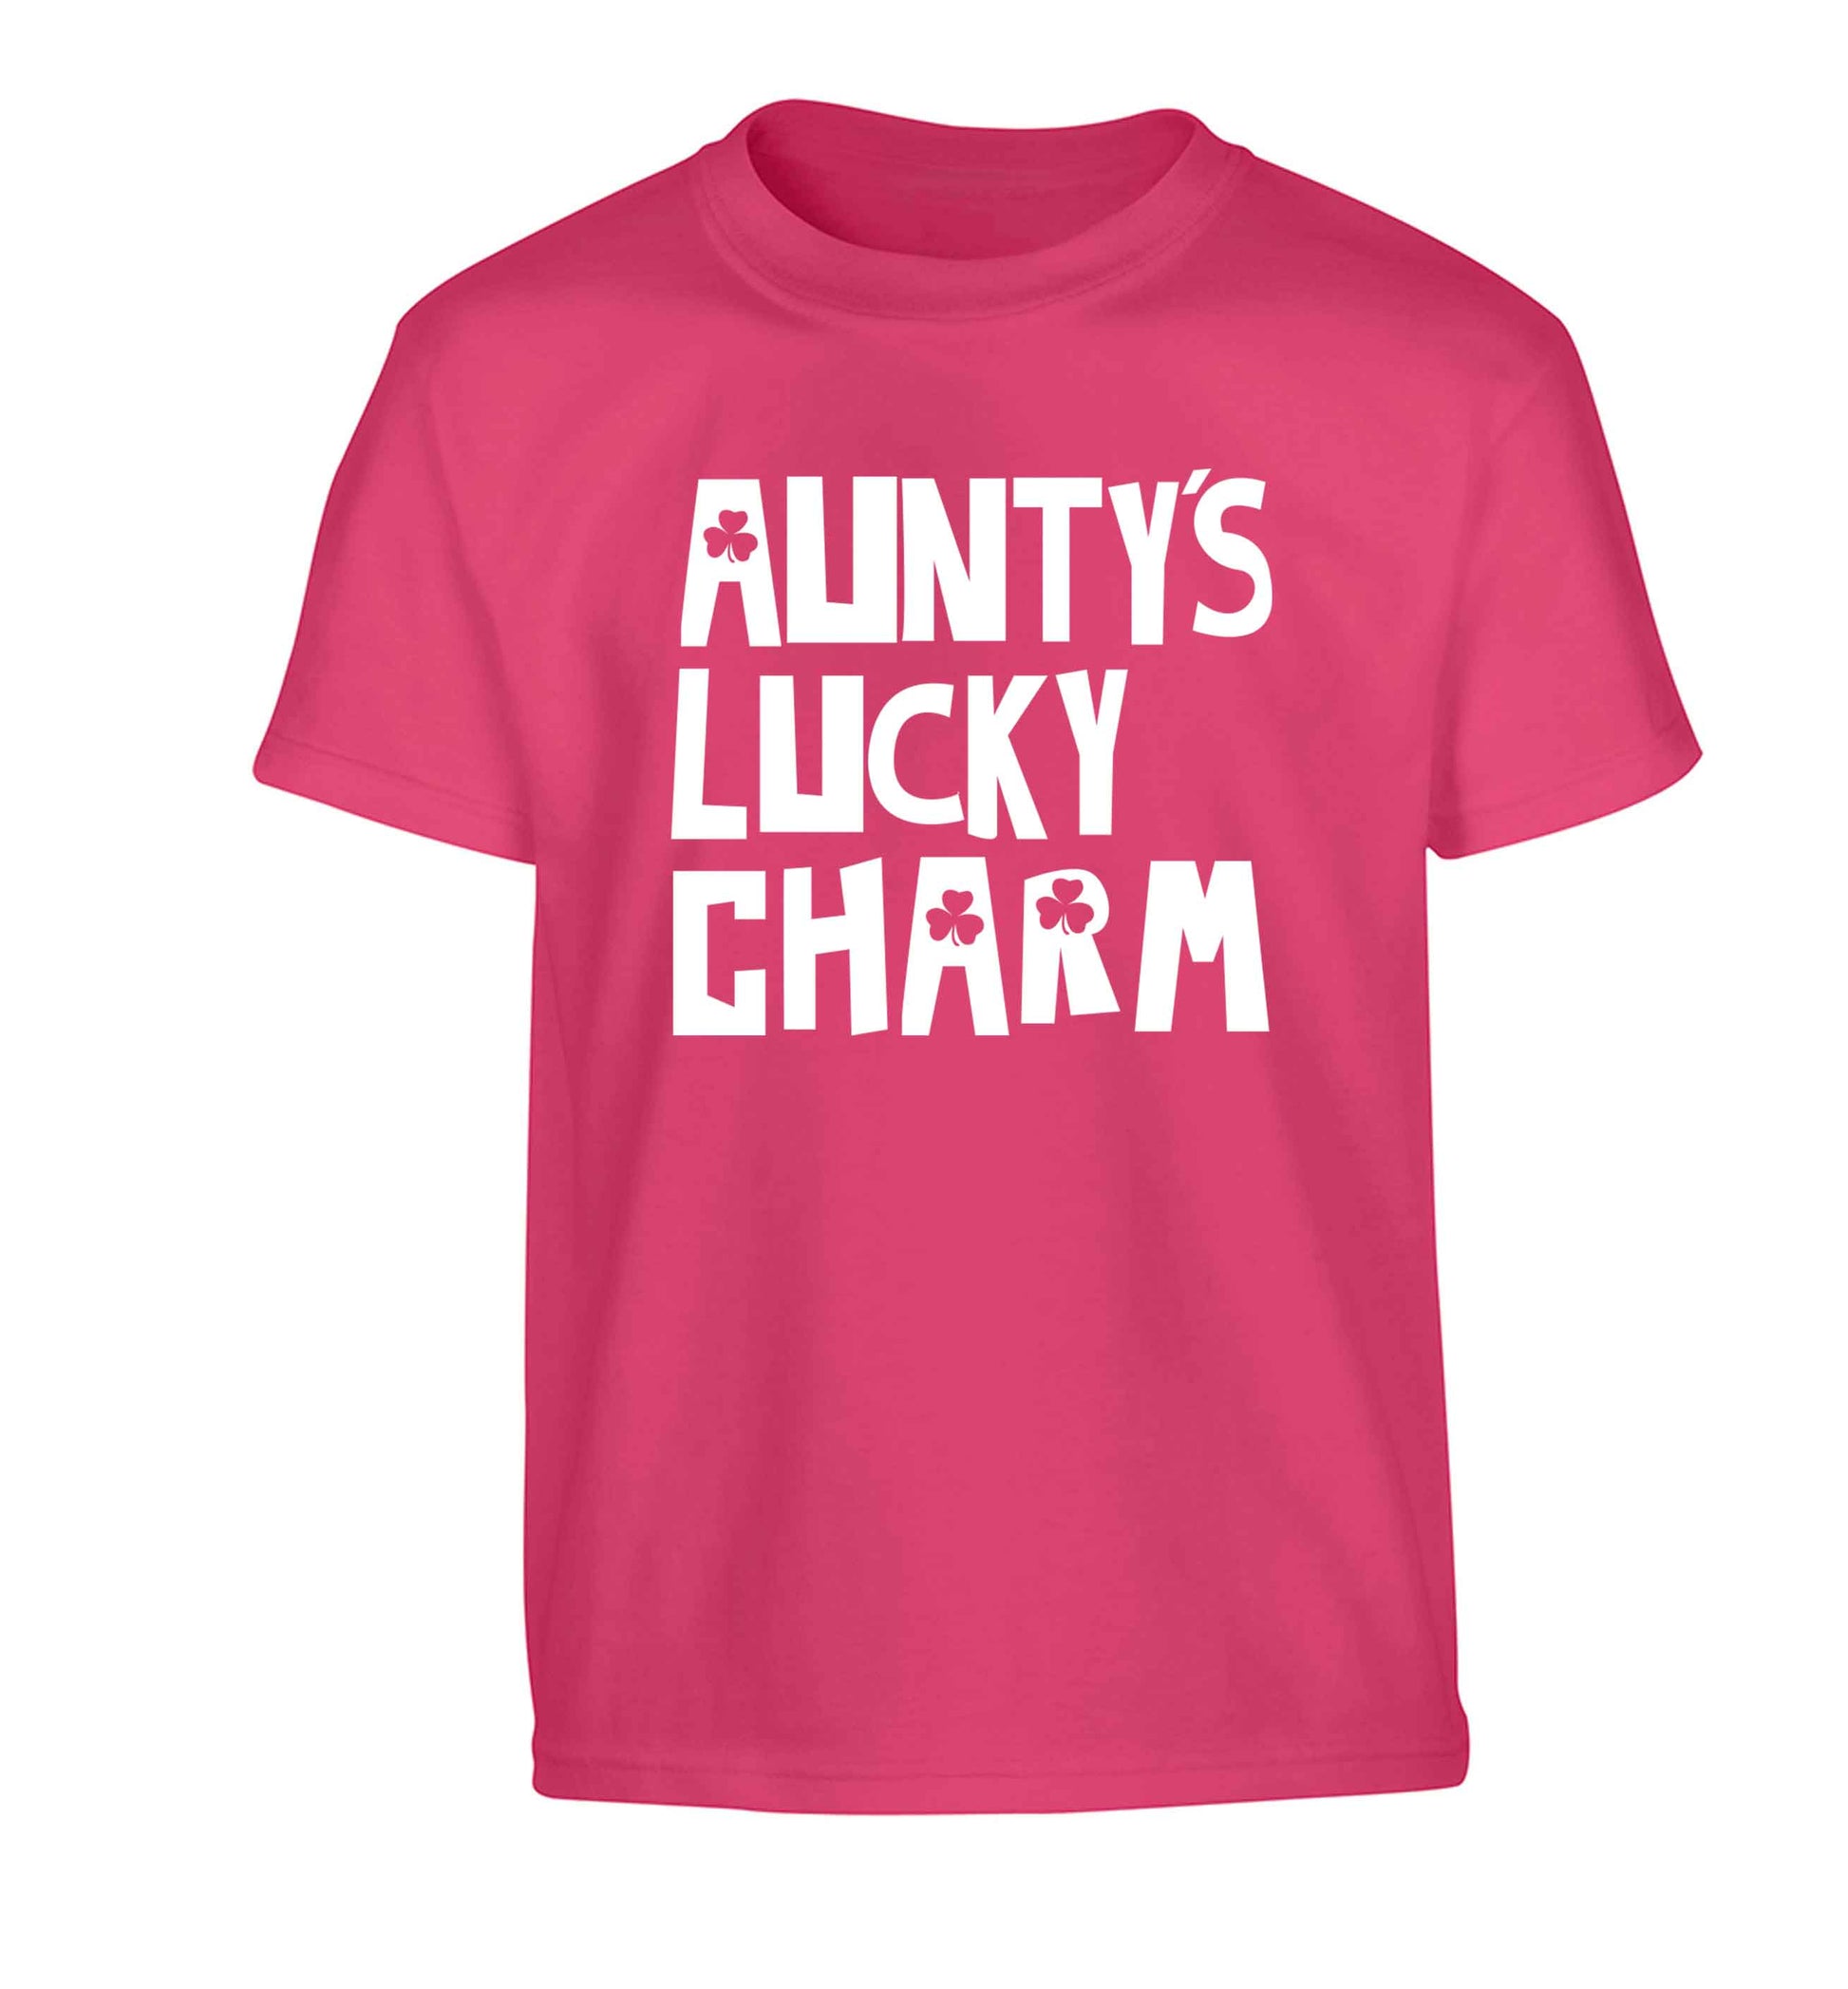 Aunty's lucky charm Children's pink Tshirt 12-13 Years